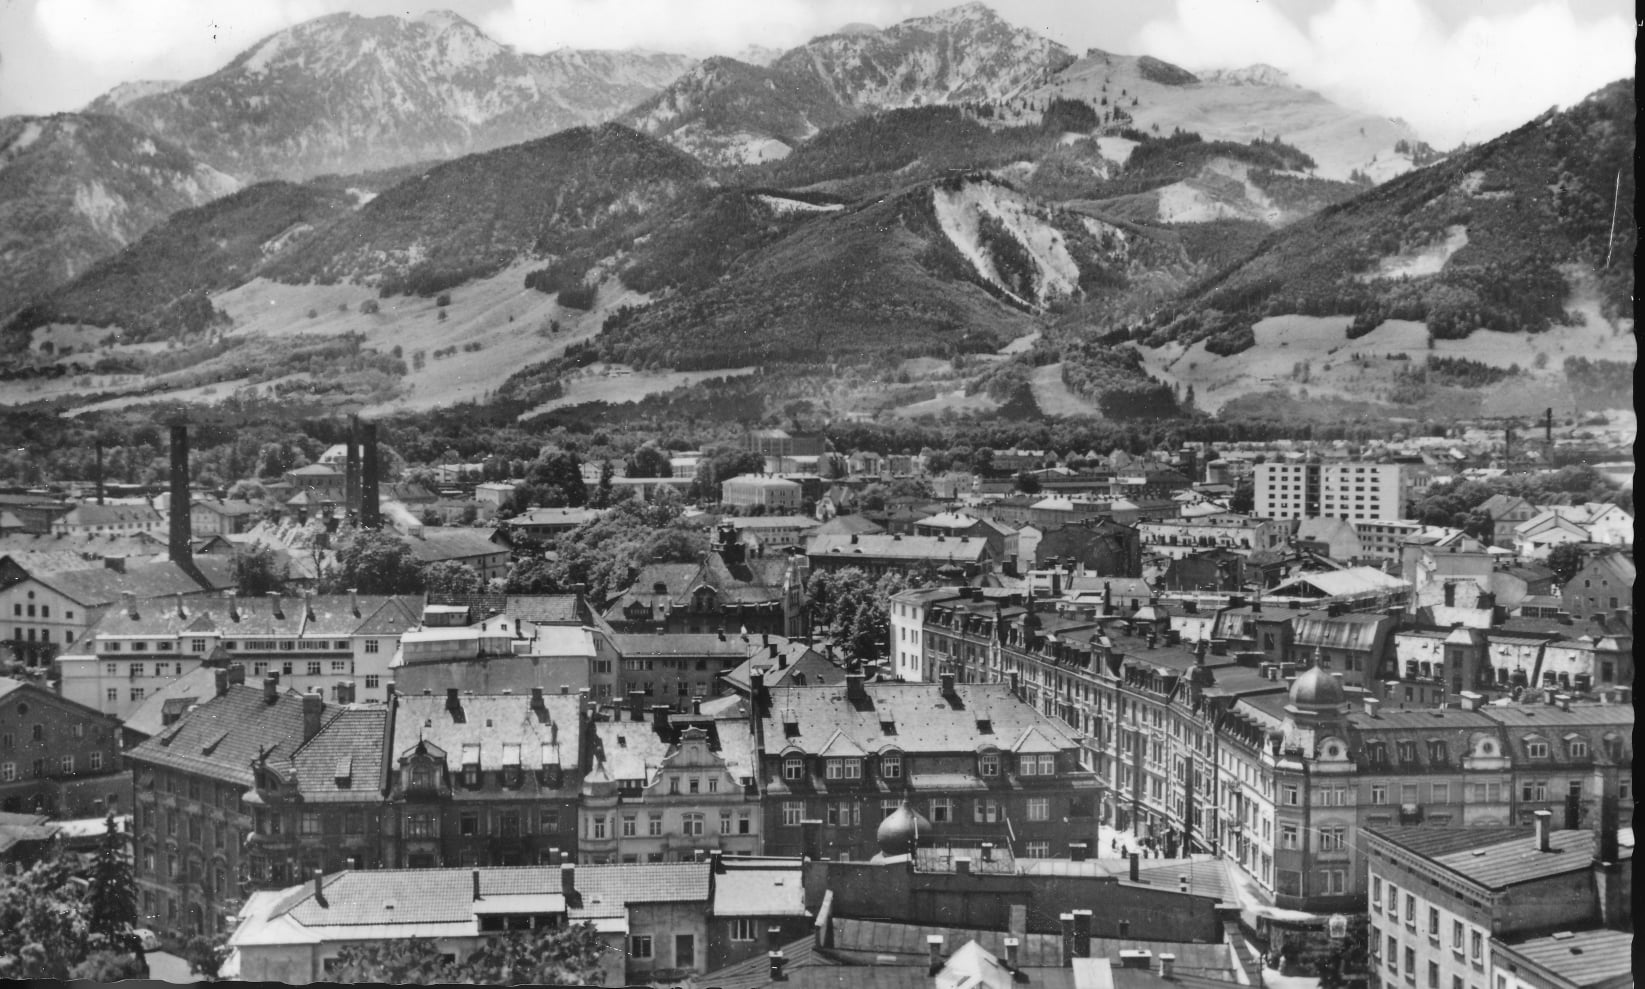 Luftaufnahme Rosenheim im Jahr 1960. Foto: Archiv Herbert Borrmann